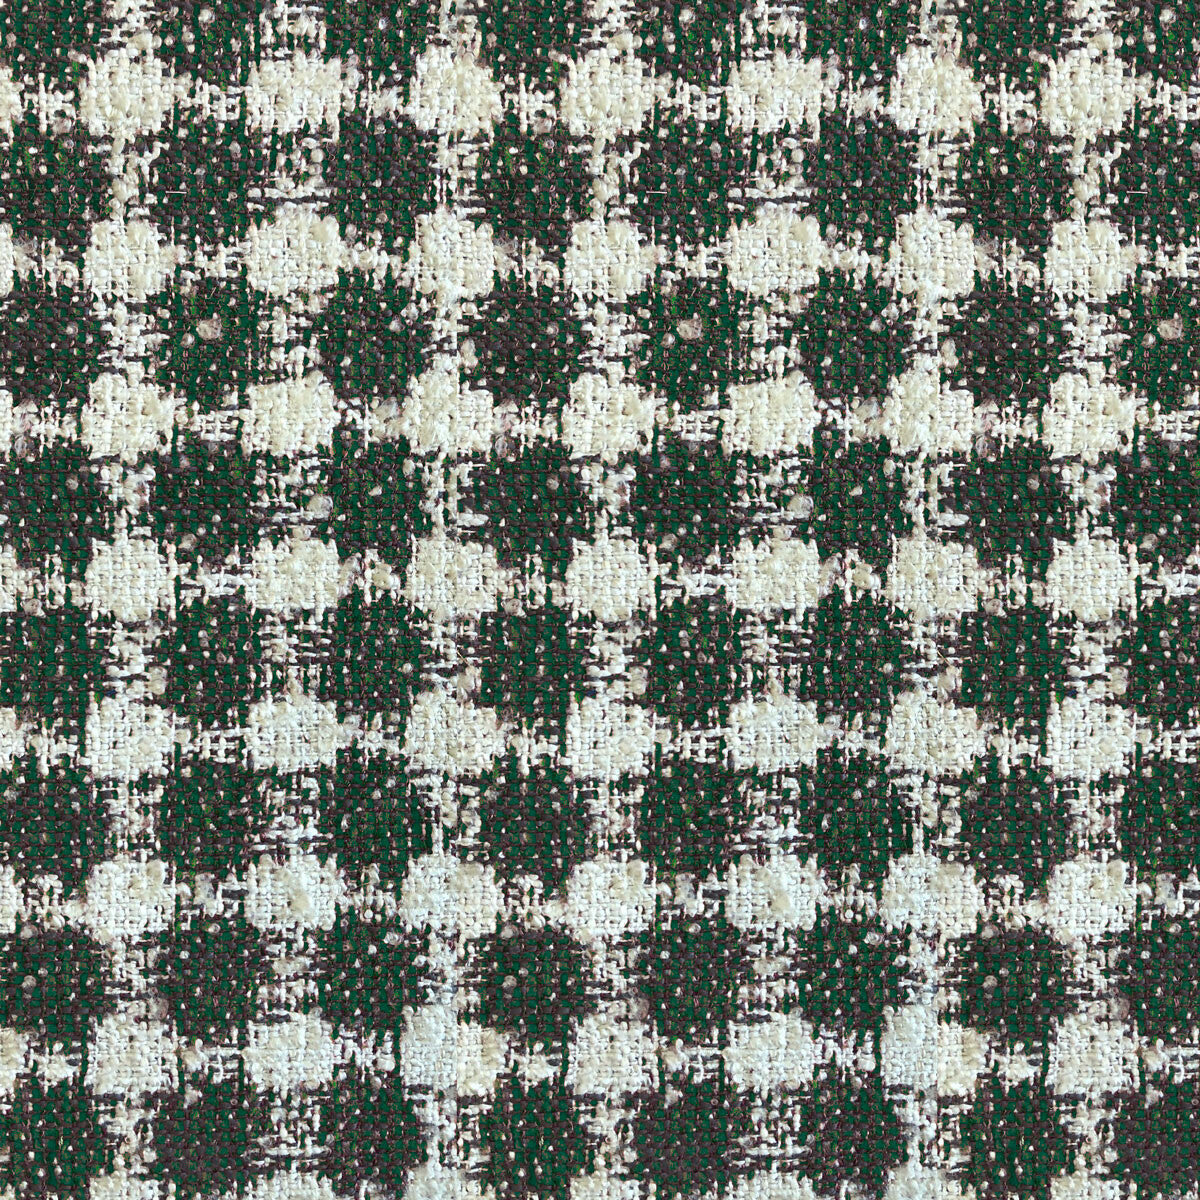 Pedraza fabric in verde color - pattern LCT1050.005.0 - by Gaston y Daniela in the Lorenzo Castillo VI collection